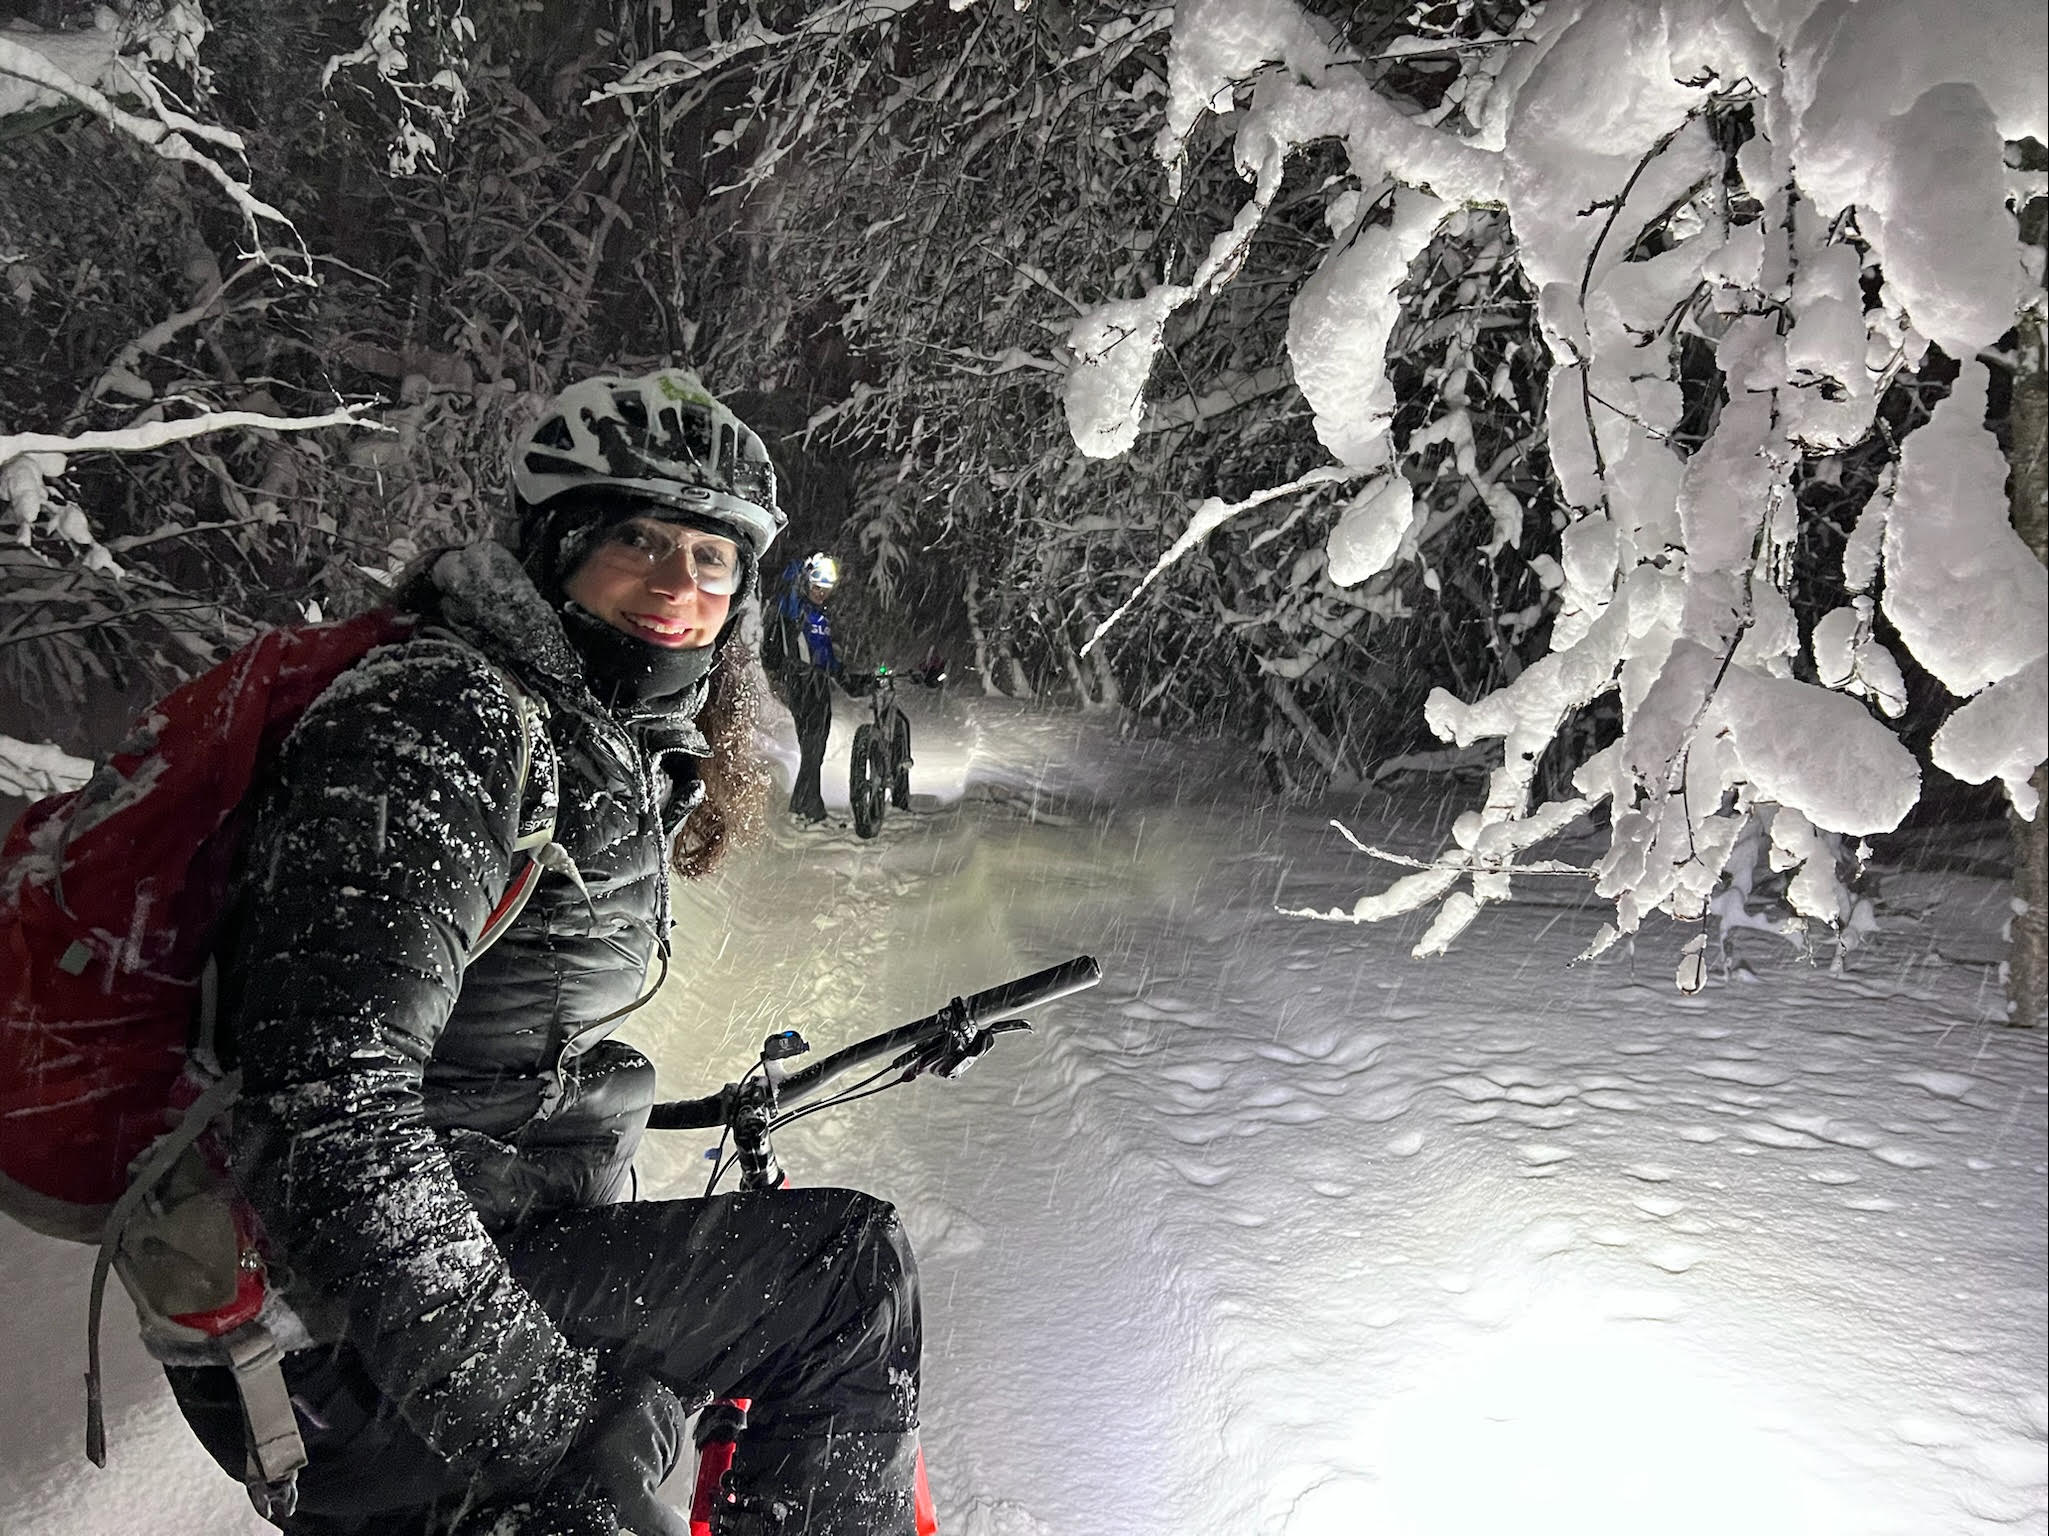 Fat biking in a snow storm, in a snowy forest.